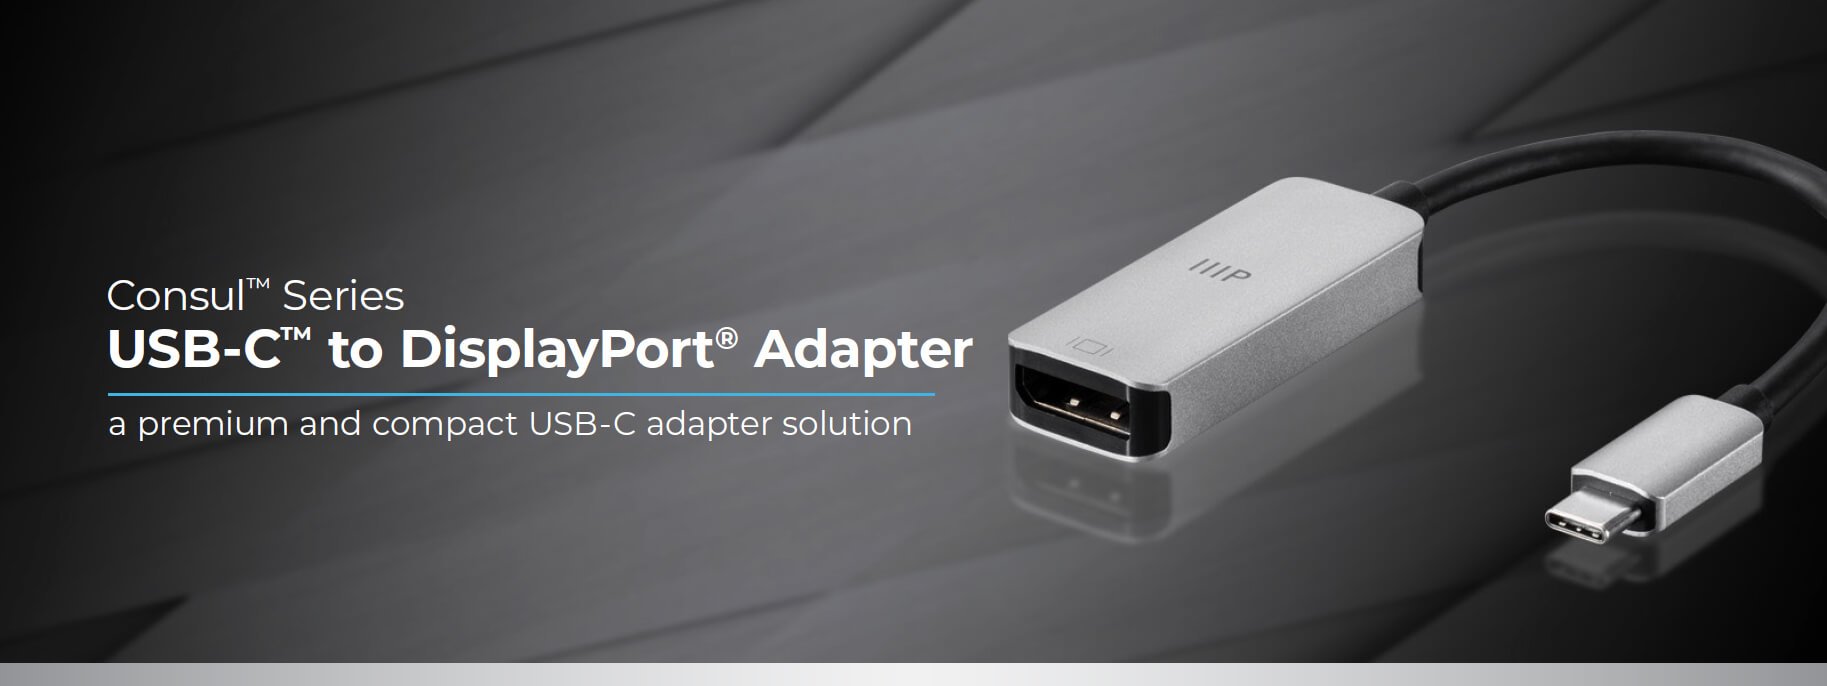 USB-C to Display Port Adapter